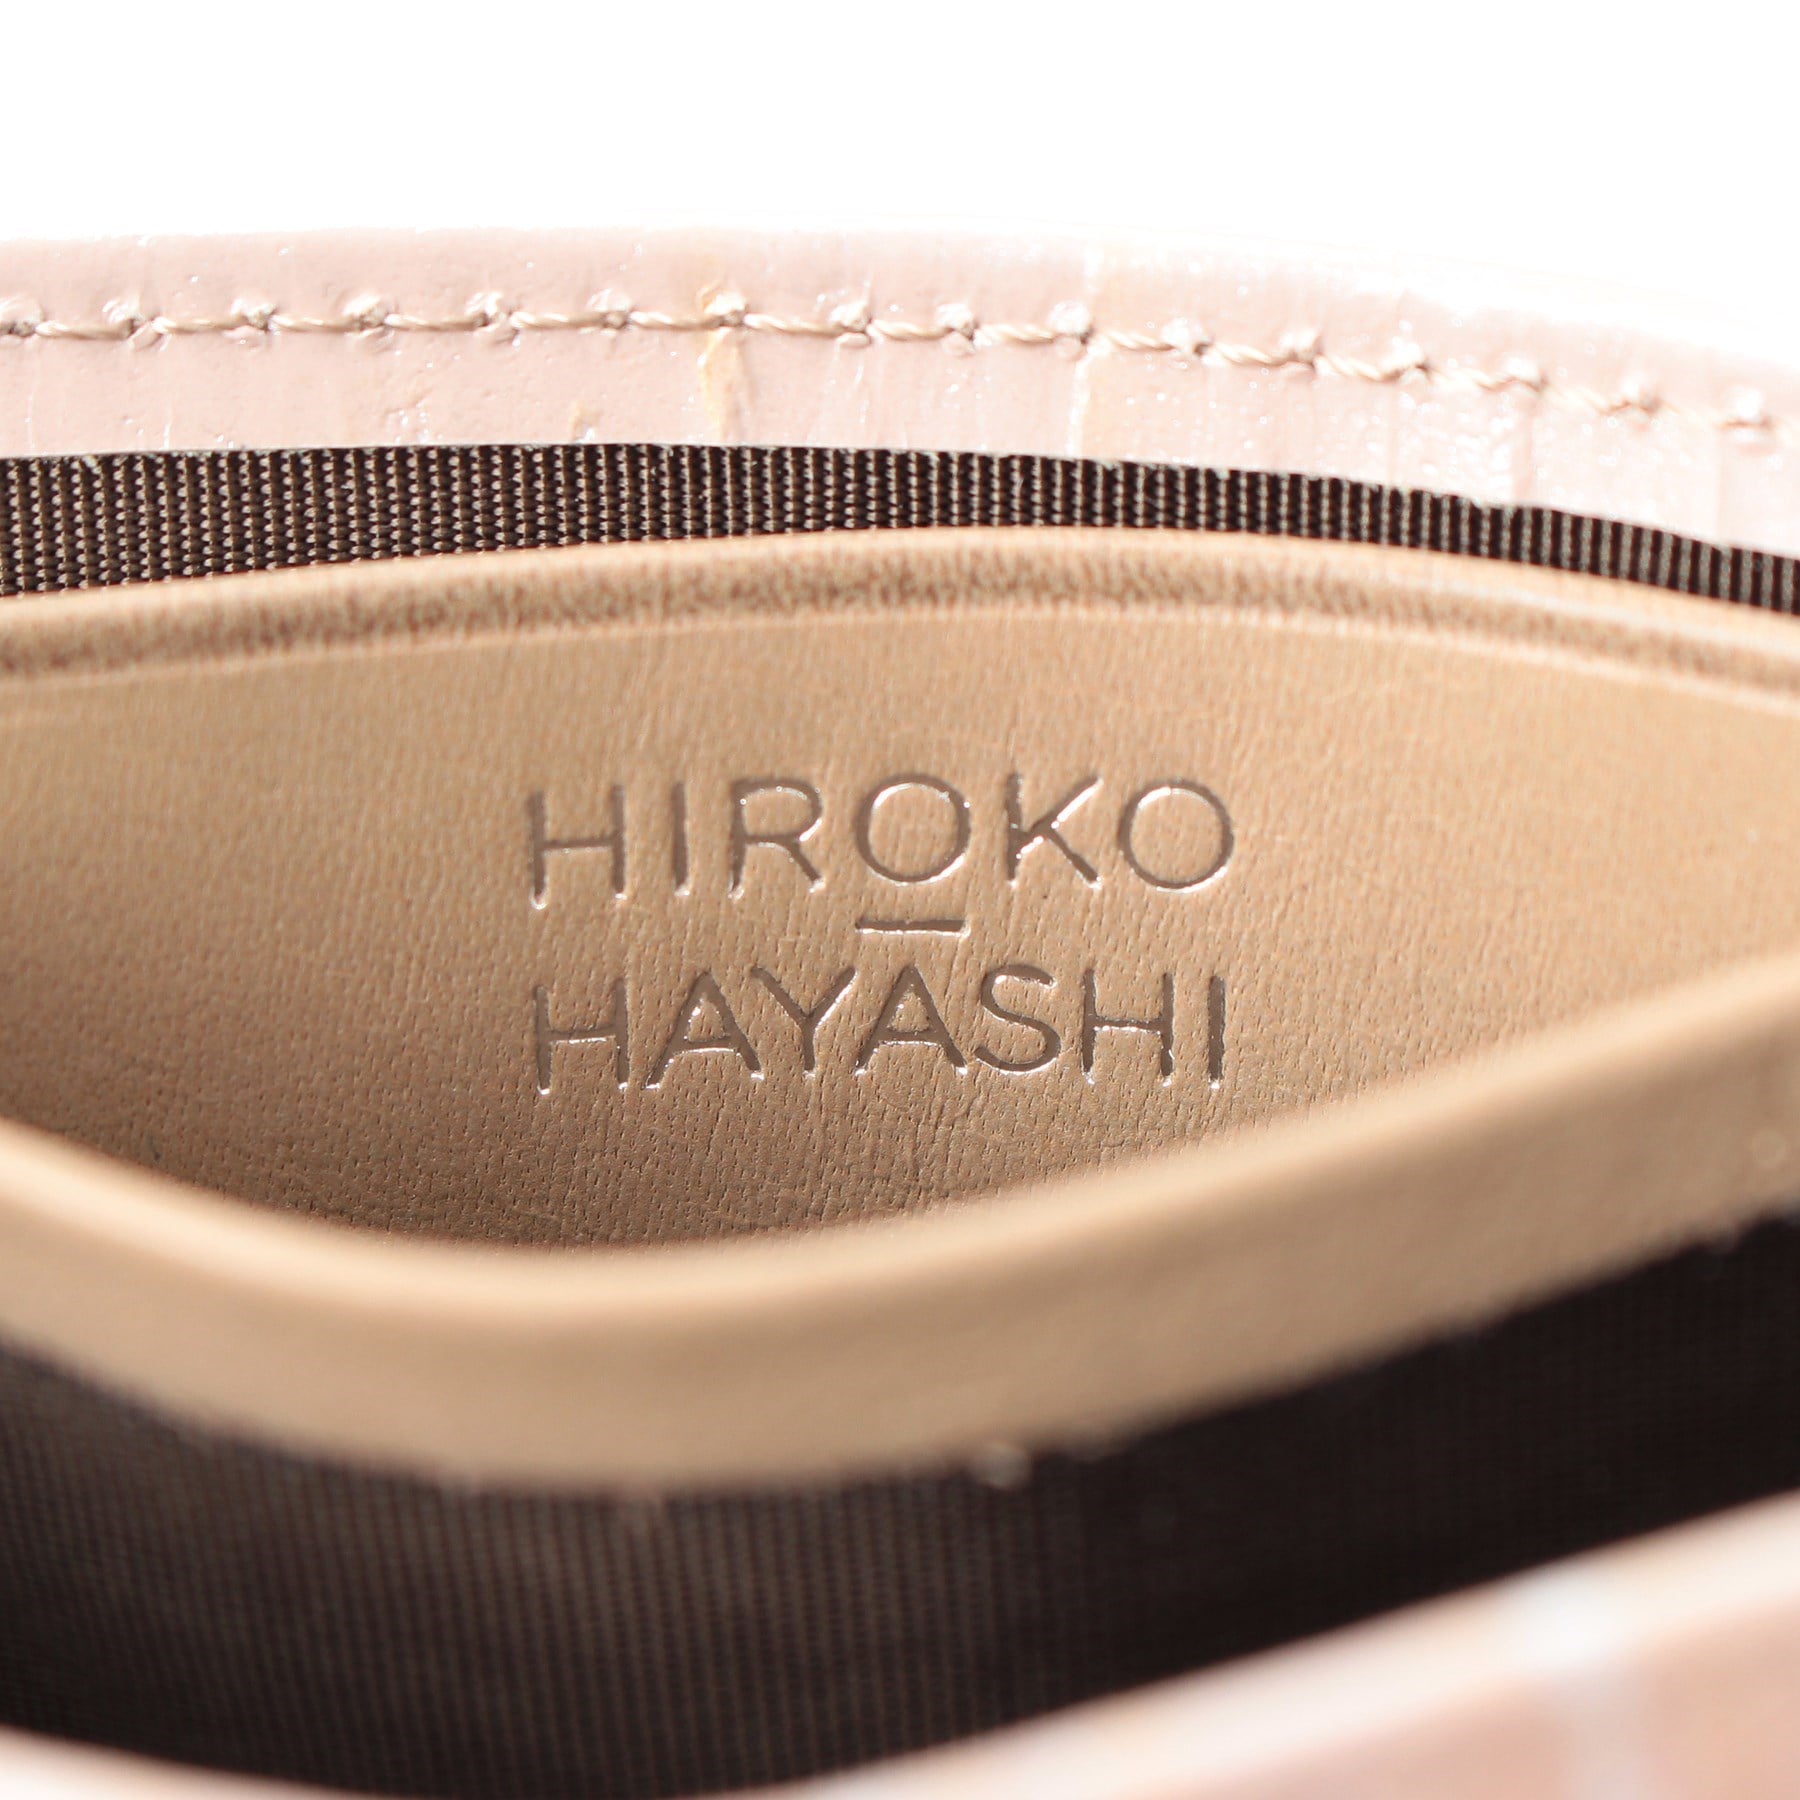 LA SCALA（スカラ）名刺入れ|HIROKO HAYASHI(ヒロコ ハヤシ)の通販